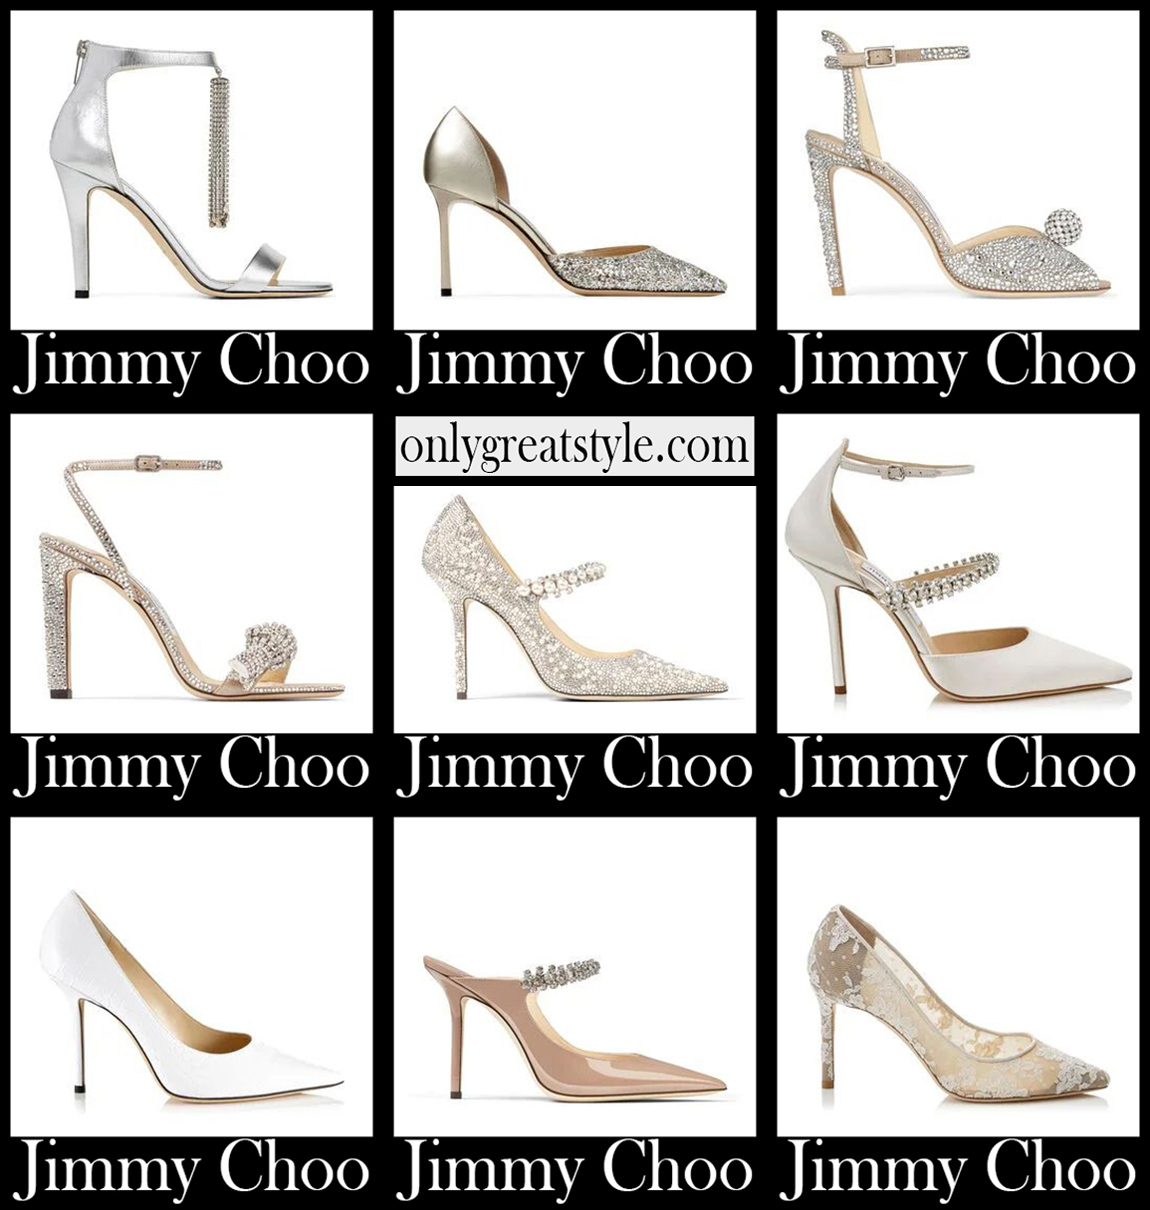 Jimmy Choo bridal shoes 2021 new arrivals footwear